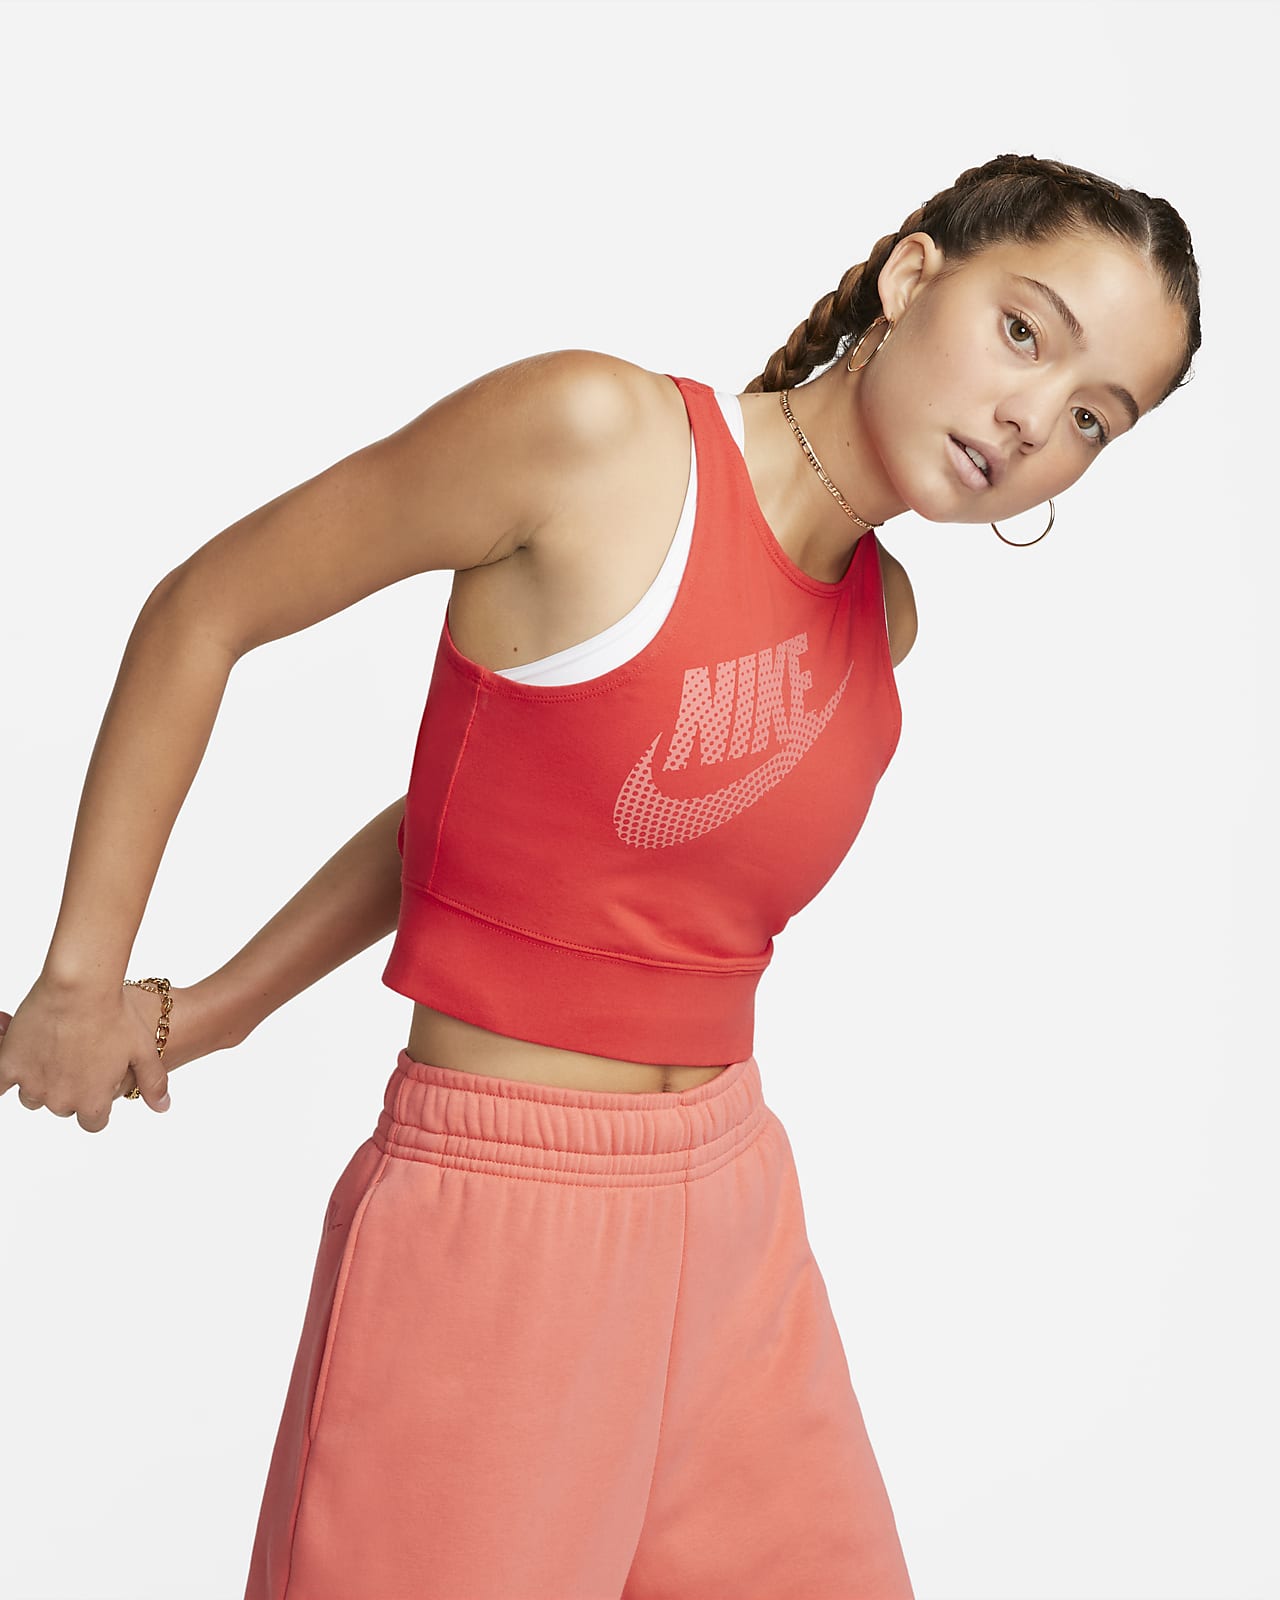 Nike Sportswear verkürztes Tanz-Tanktop für Damen